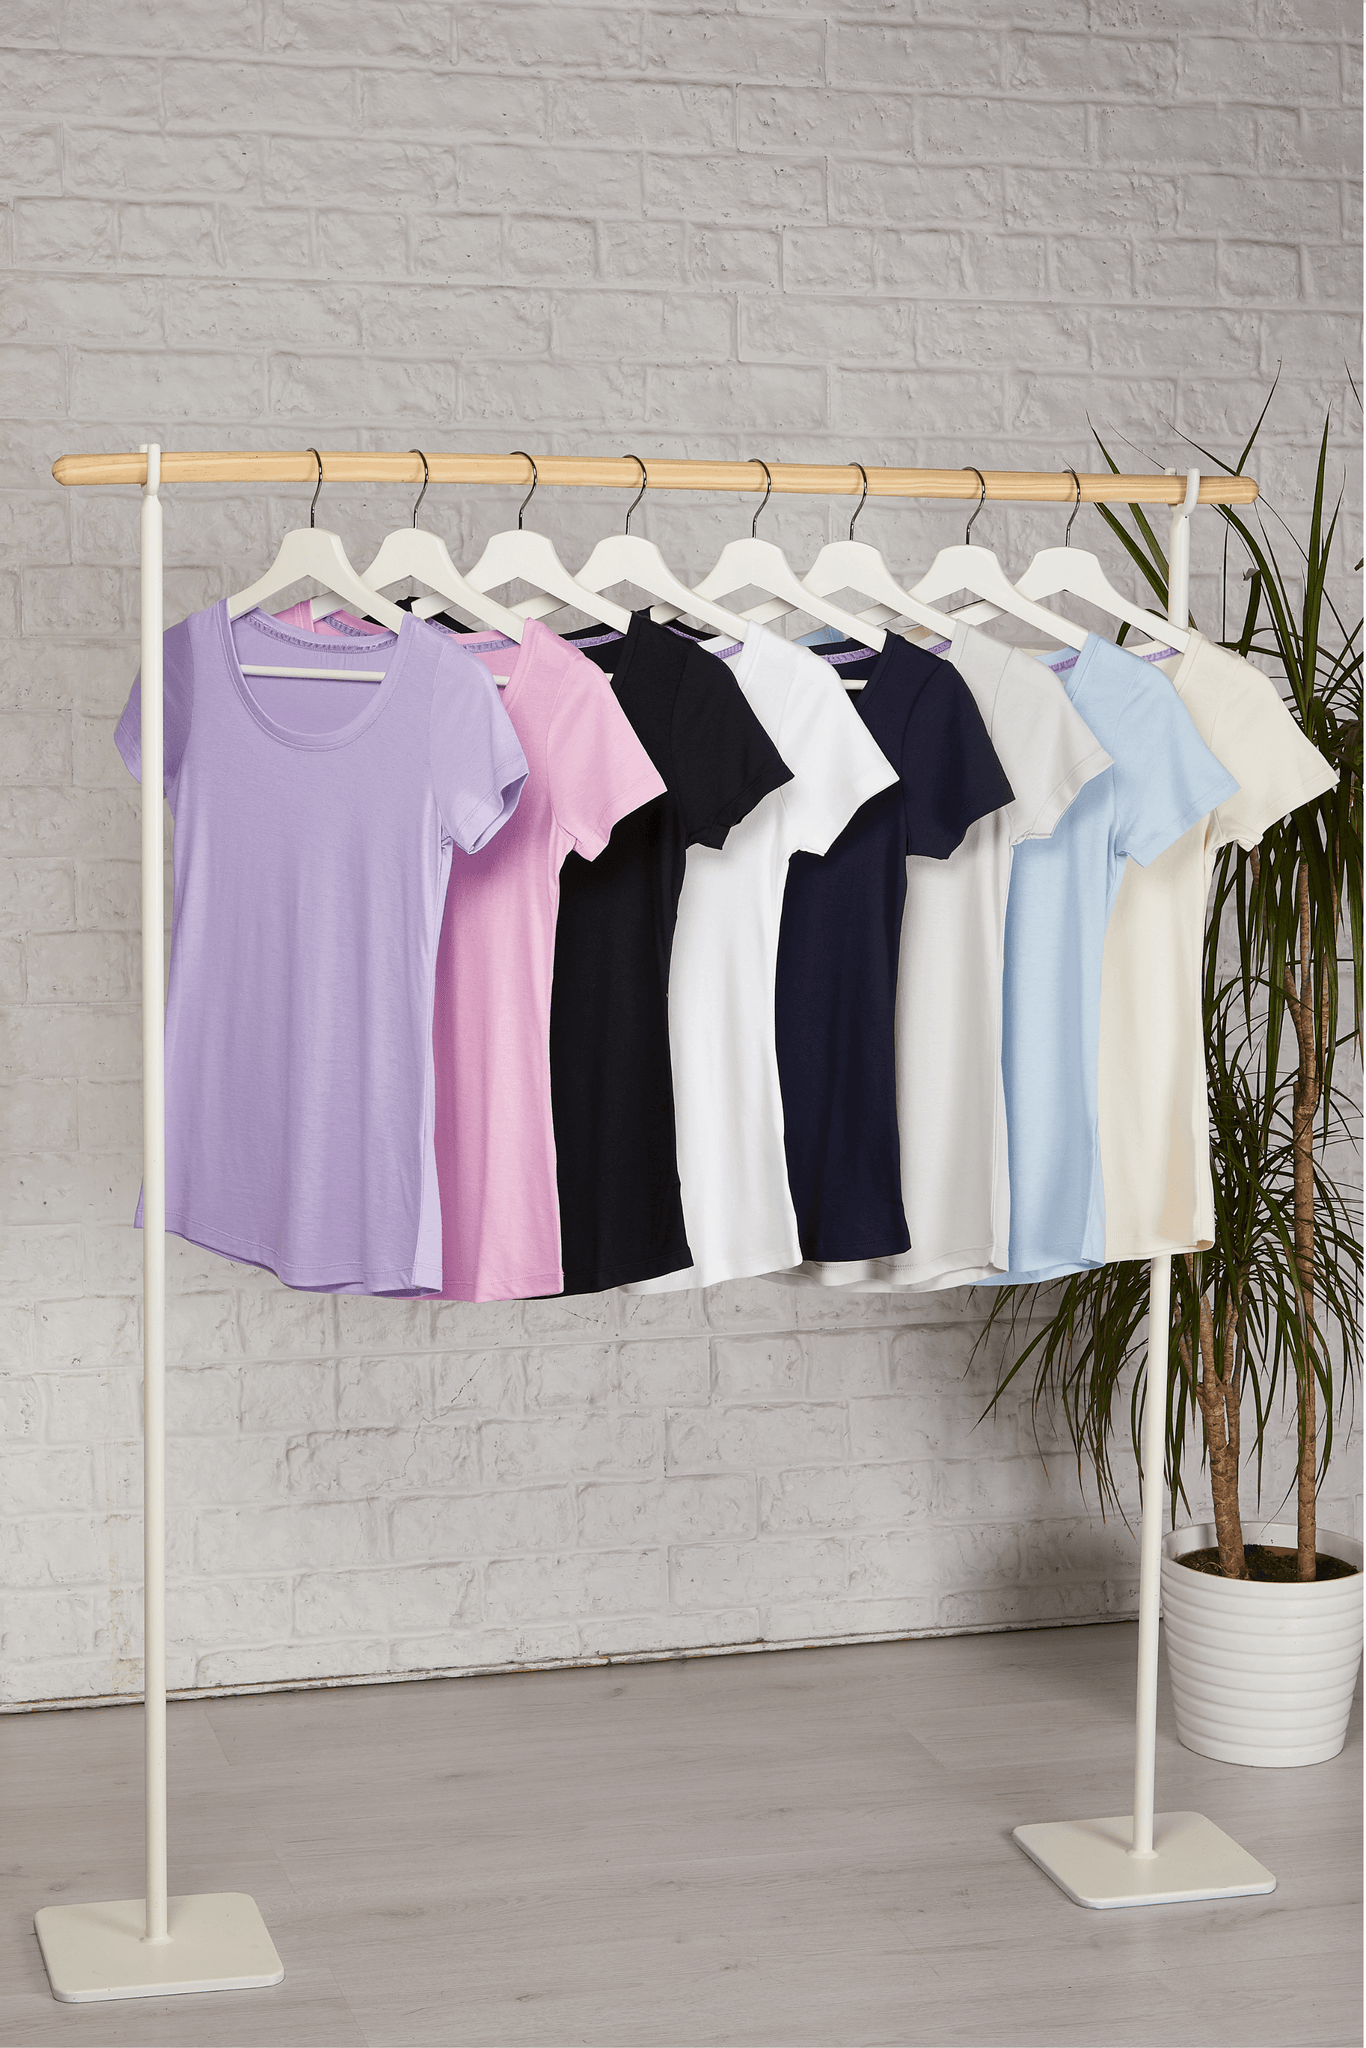 Women's High Quality Scoop Neck Cotton Modal Blend Short Sleeve T-Shirt - Flattering T-shirt - Core T-Shirt Range by Lavender Hill Clothing